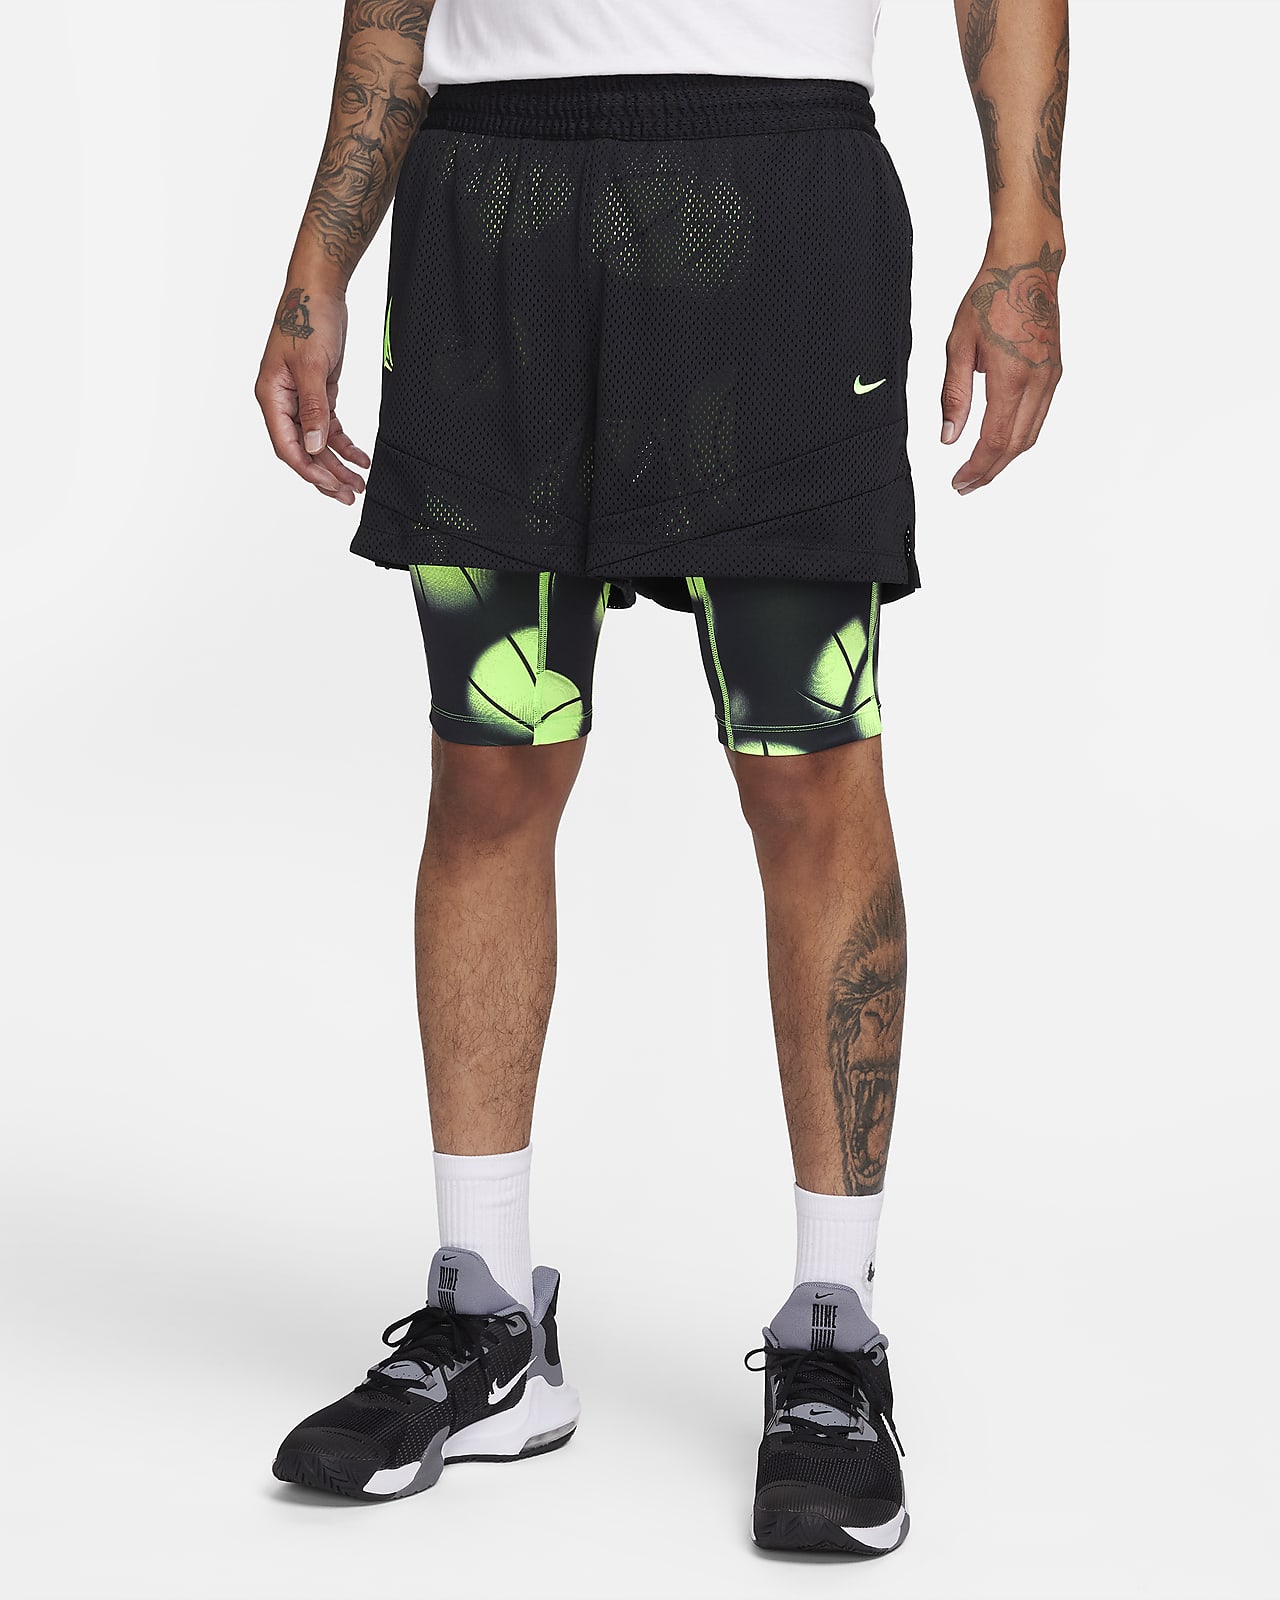 USA size Mens Basketball Shorts 8 24 Retro Mesh Embroidered Pockets Fans  Shorts